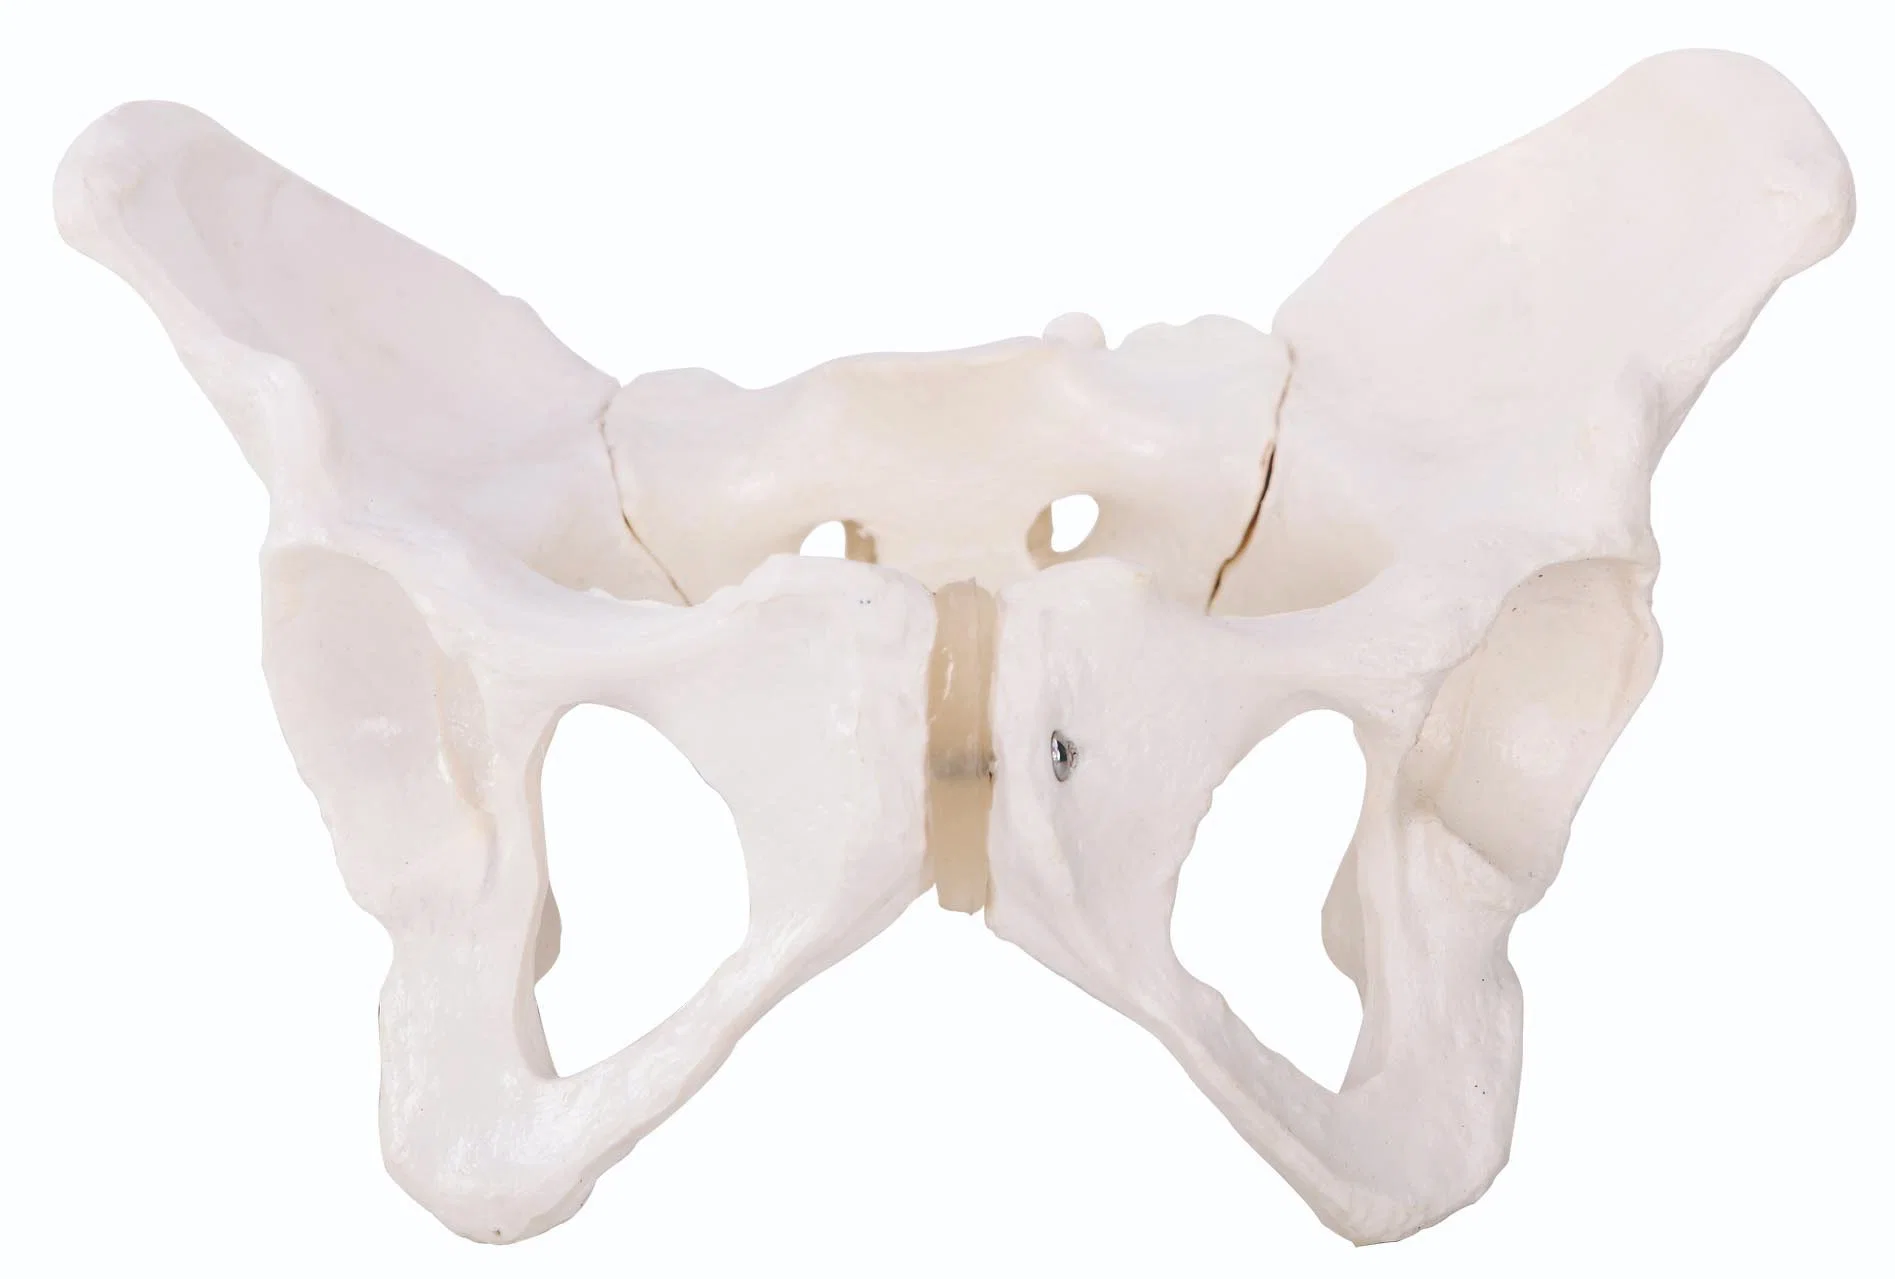 Orthocare Medical Teaching Models Teaching Anatomical Model Adult Female Pelvis Rounded Shape